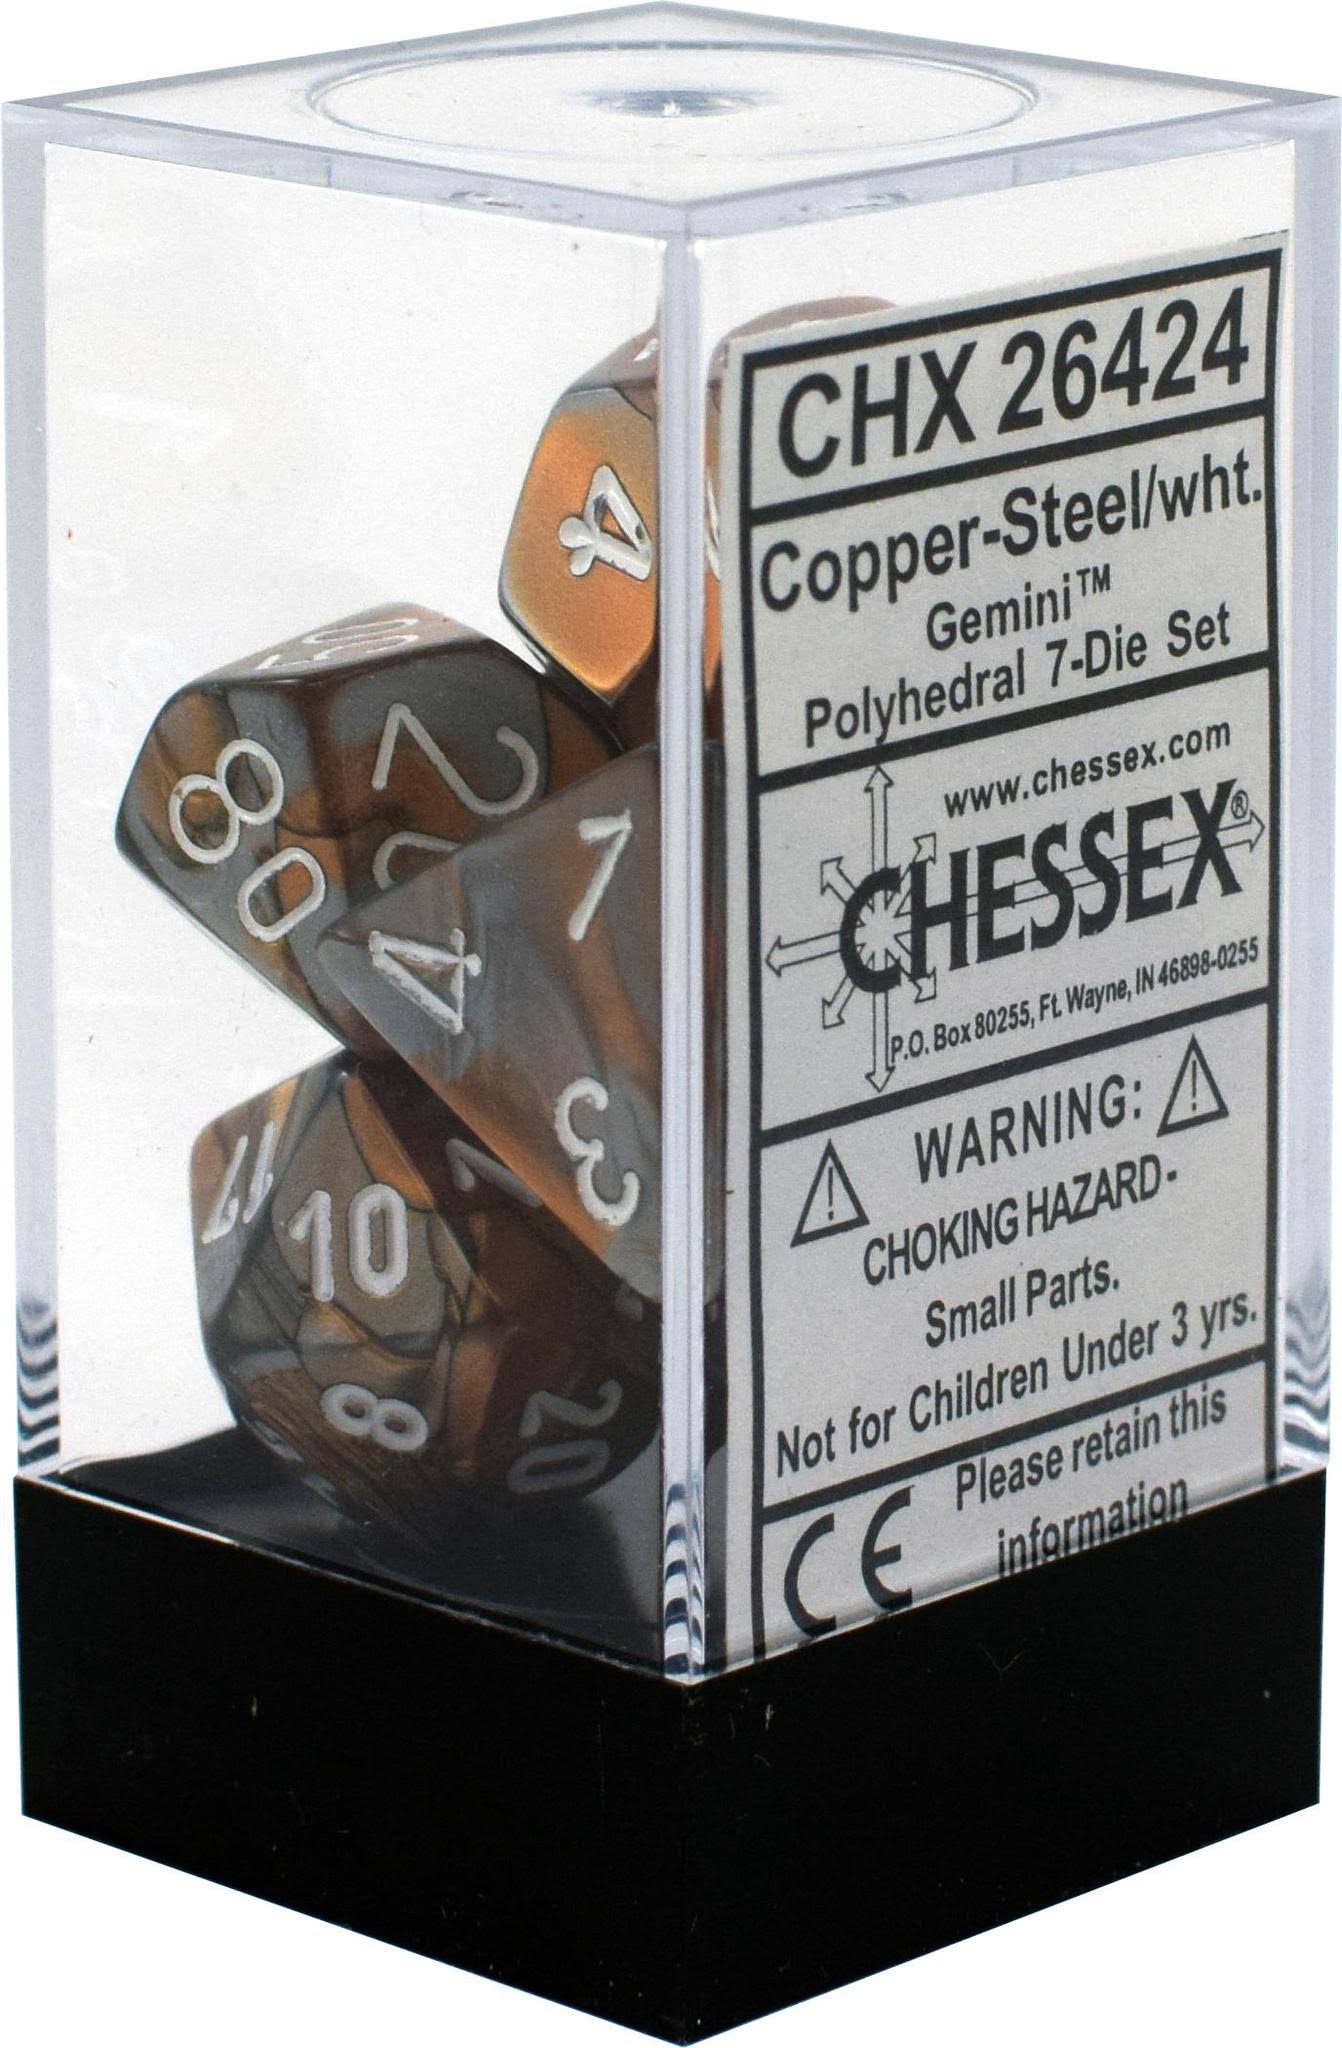 Chessex - 7-Die Set Gemini: Copper-Steel/White